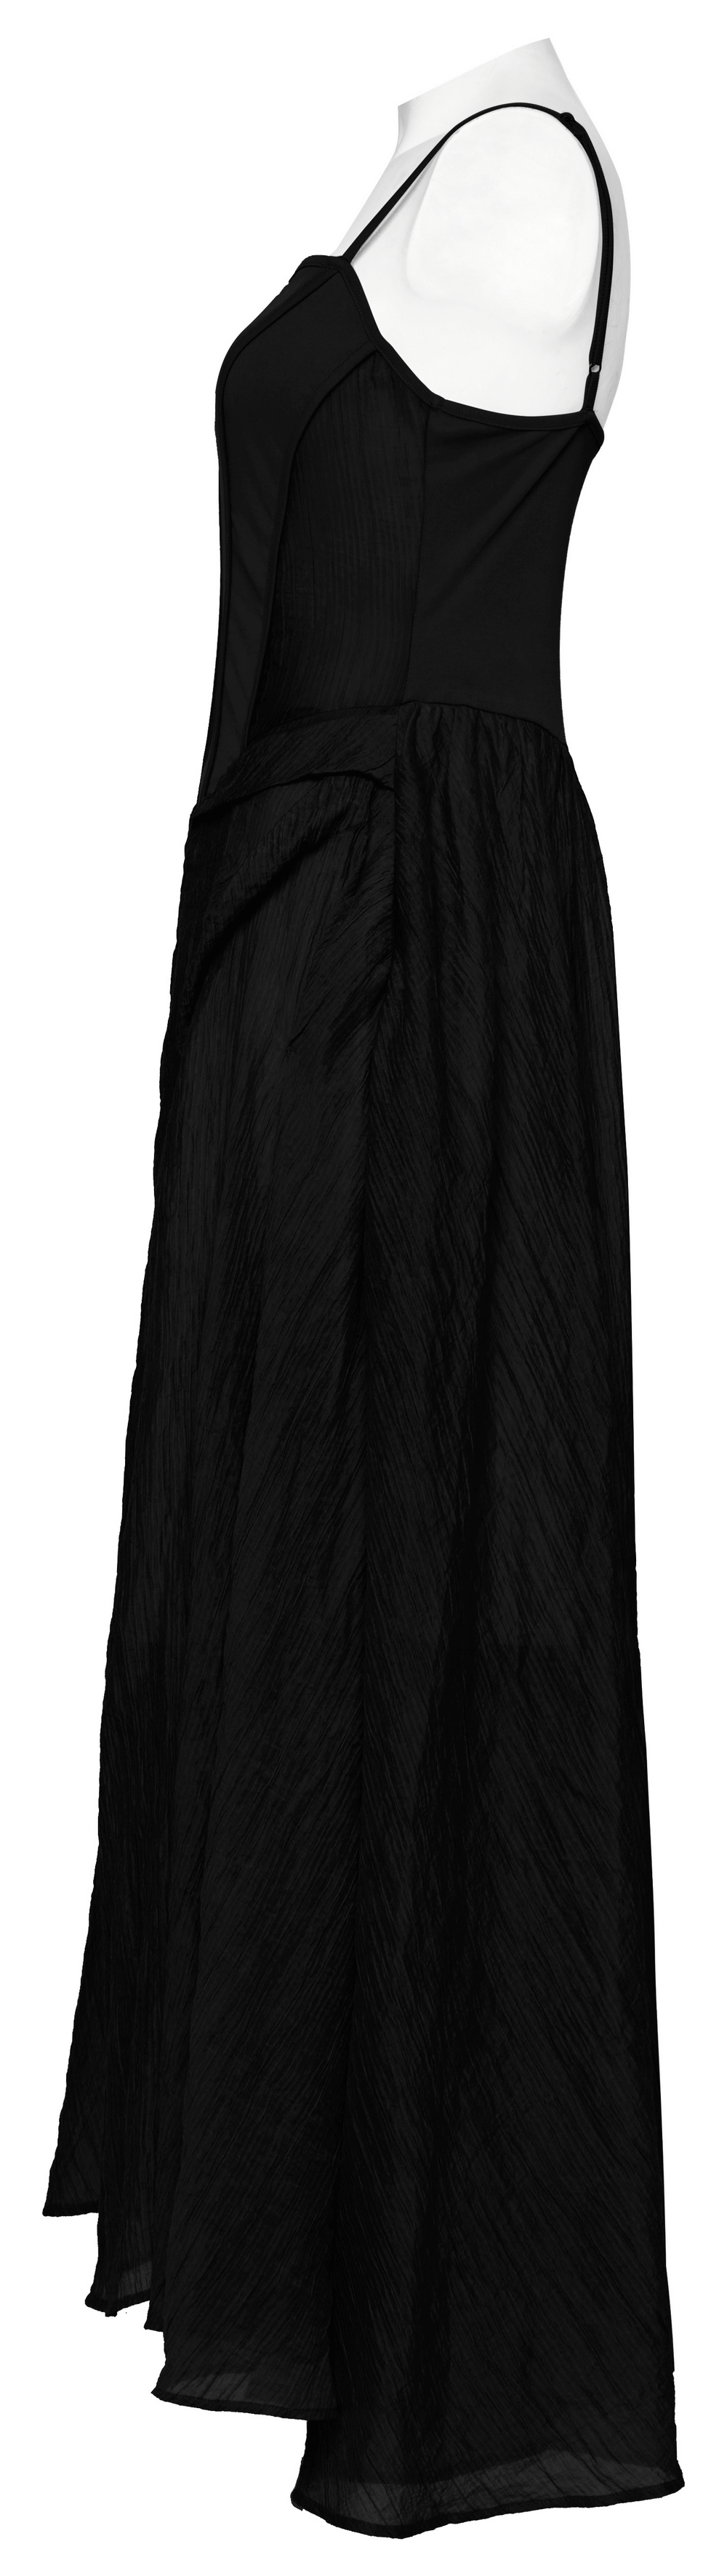 Stylish Black Diagonal Texture Tencel Slip Dress